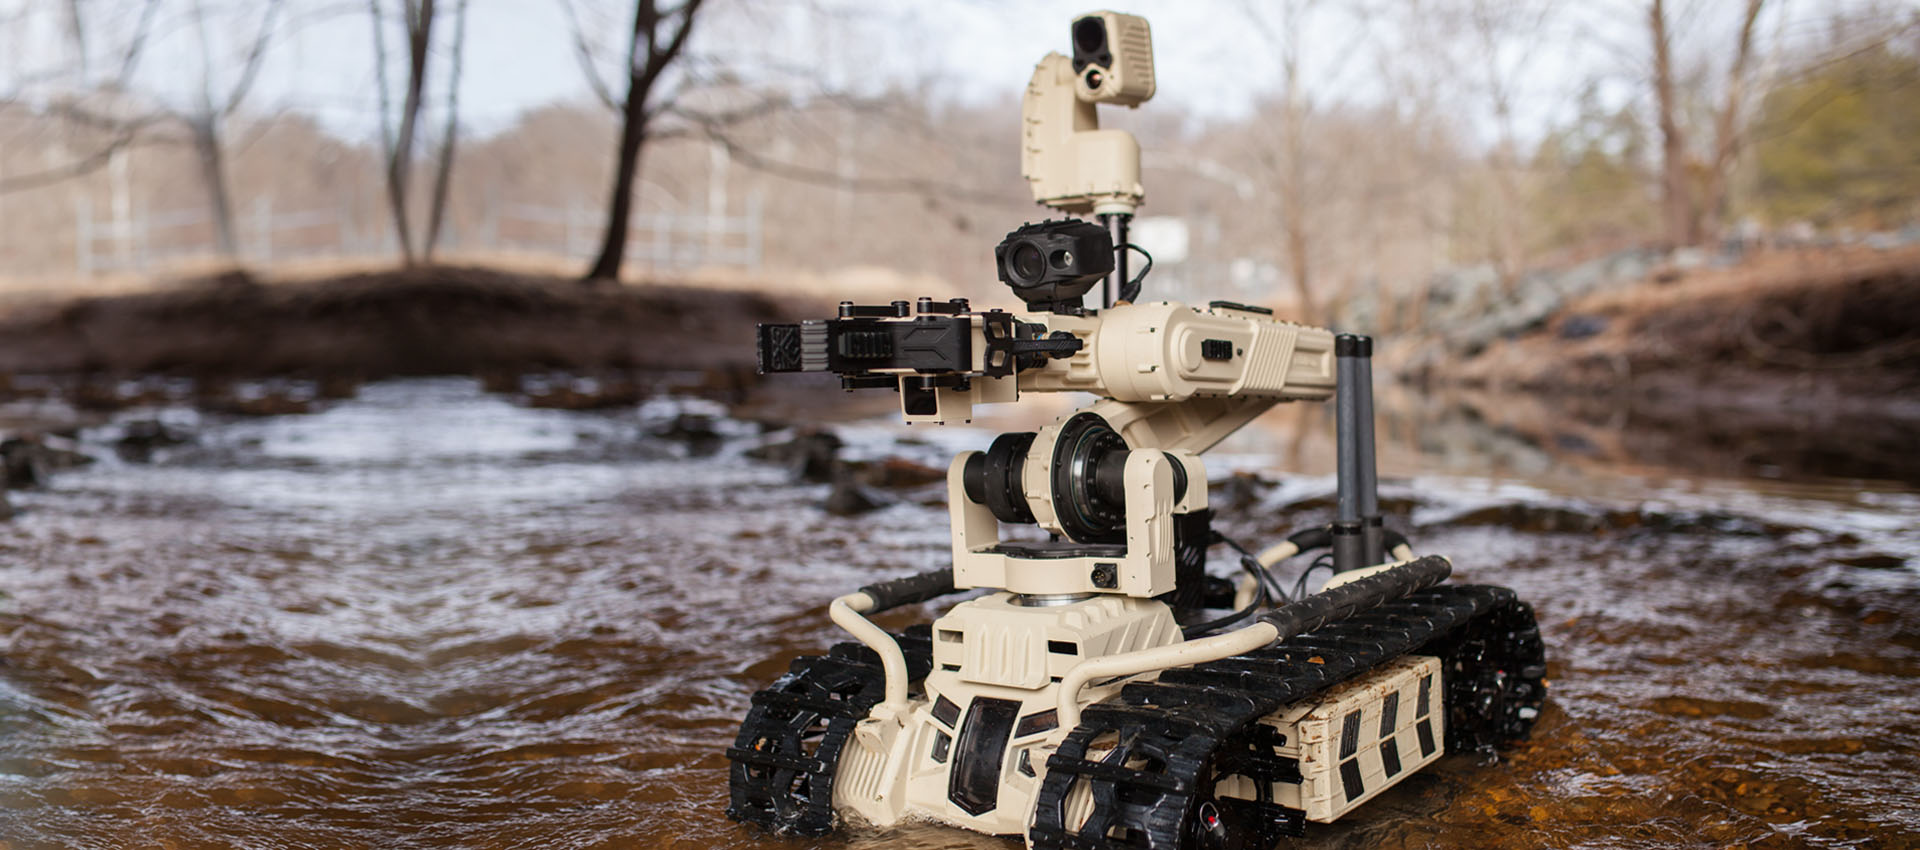 TIGR Robots in Water